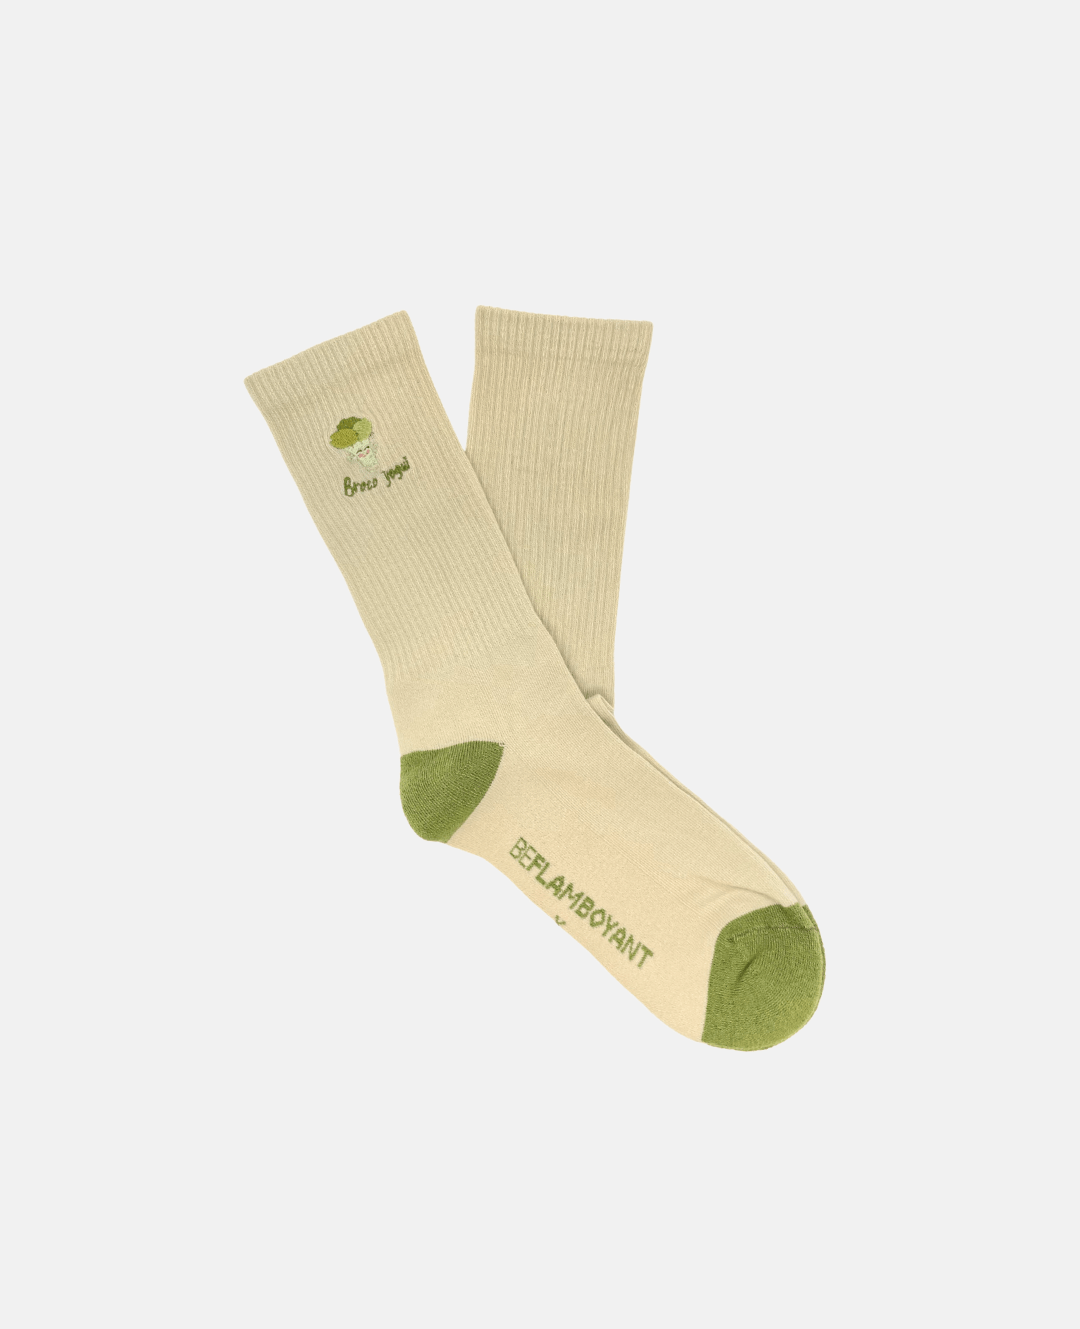 brocco-yogui-organic-cotton-socks-side-view